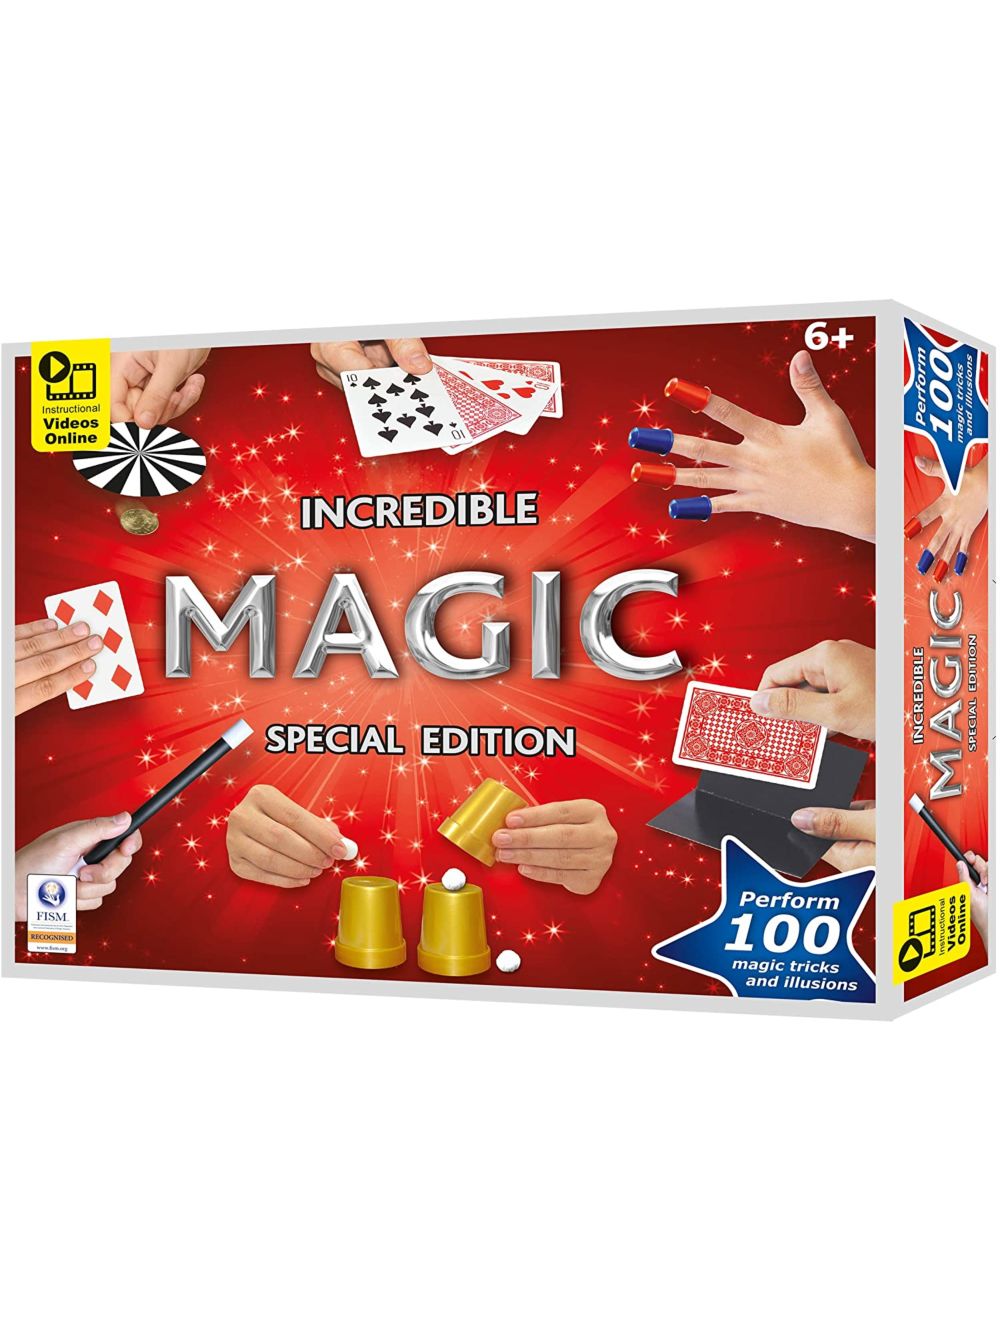 Magic Trick Set Incredible Magic Special Edition 100 Tricks RRP £14.99 CLEARANCE XL £10.99